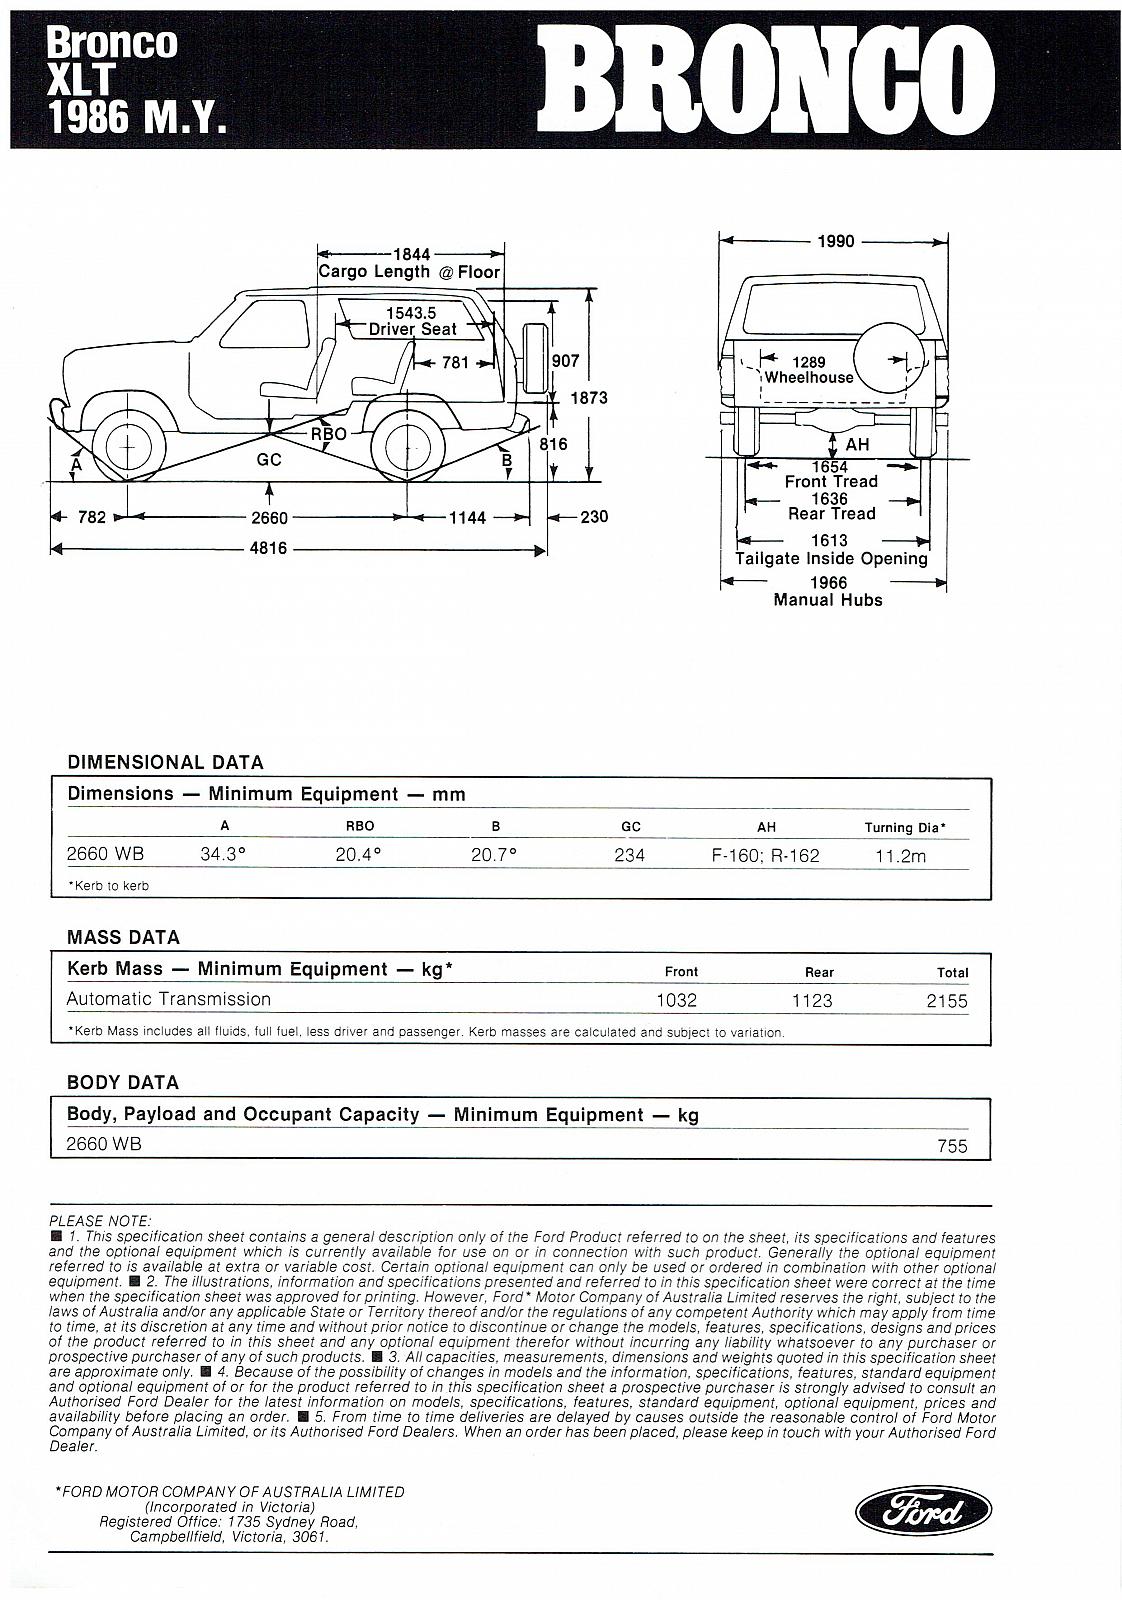 1986 Ford Bronco Spec Sheet (Aus)-02.jpg.jpg-2022-12-7 13.51.59